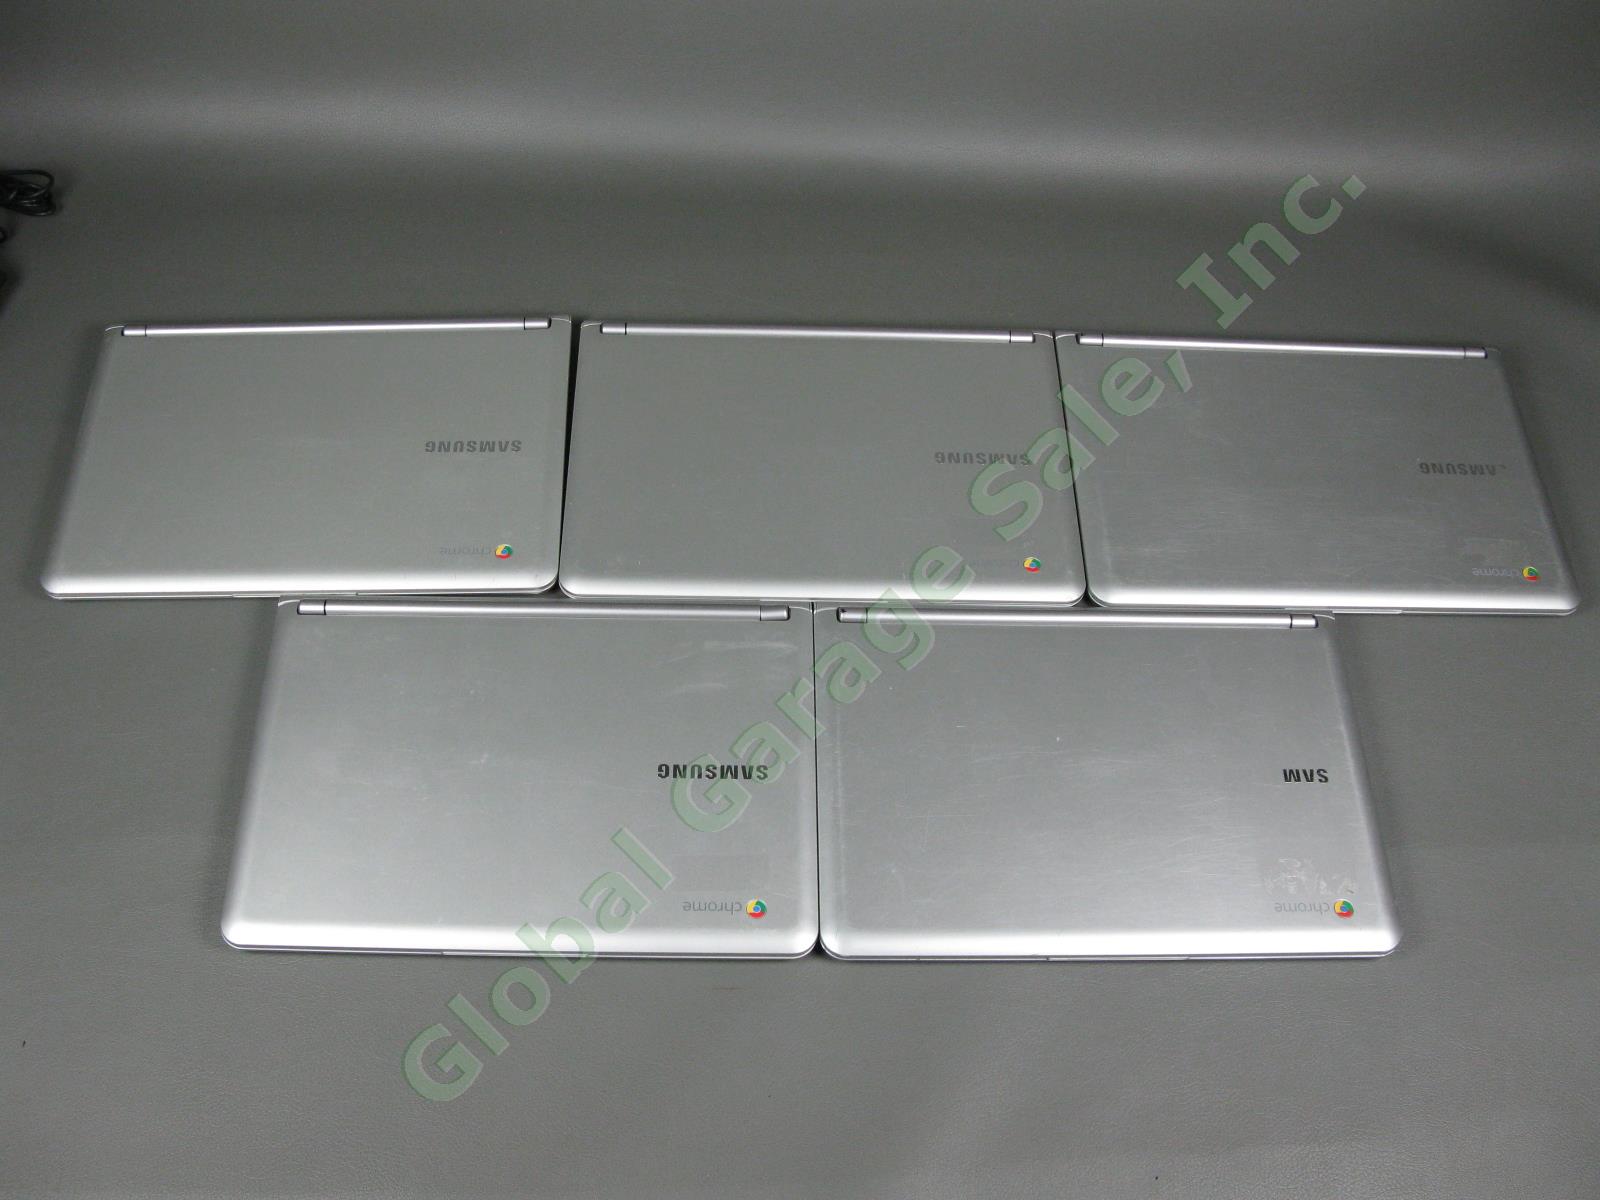 5 Samsung Chromebook 303C Laptop Computers Lot 11.6" 1.7GHz 2GB 16GB XE303C12 1